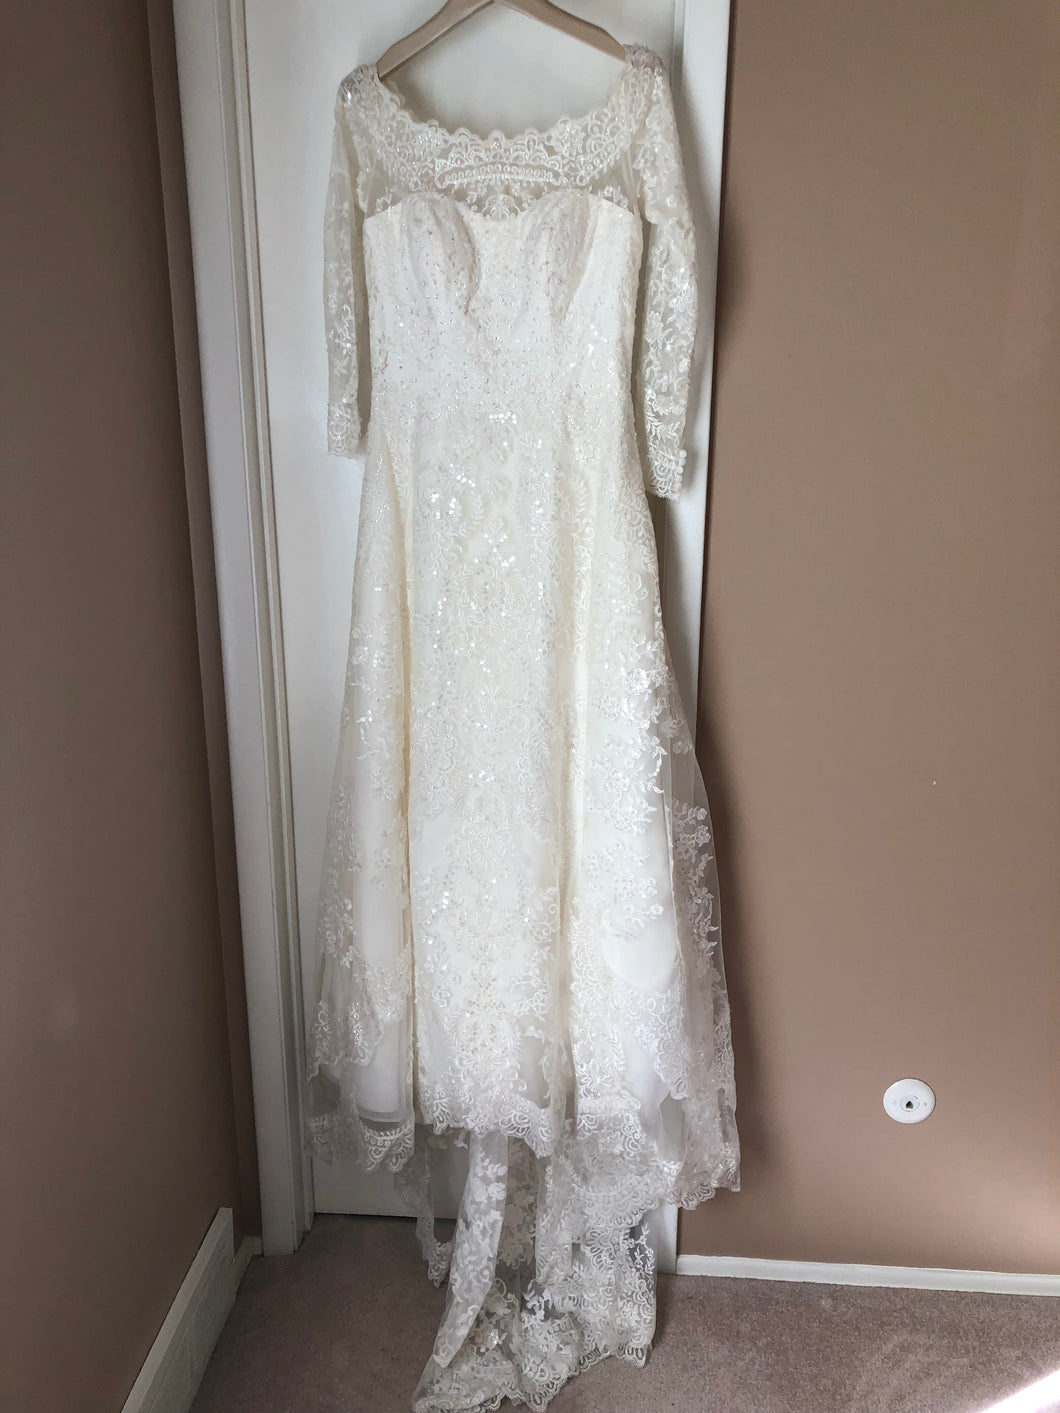 Oleg Cassini 'Off Shoulder Lace' size 10 used wedding dress front view on hanger